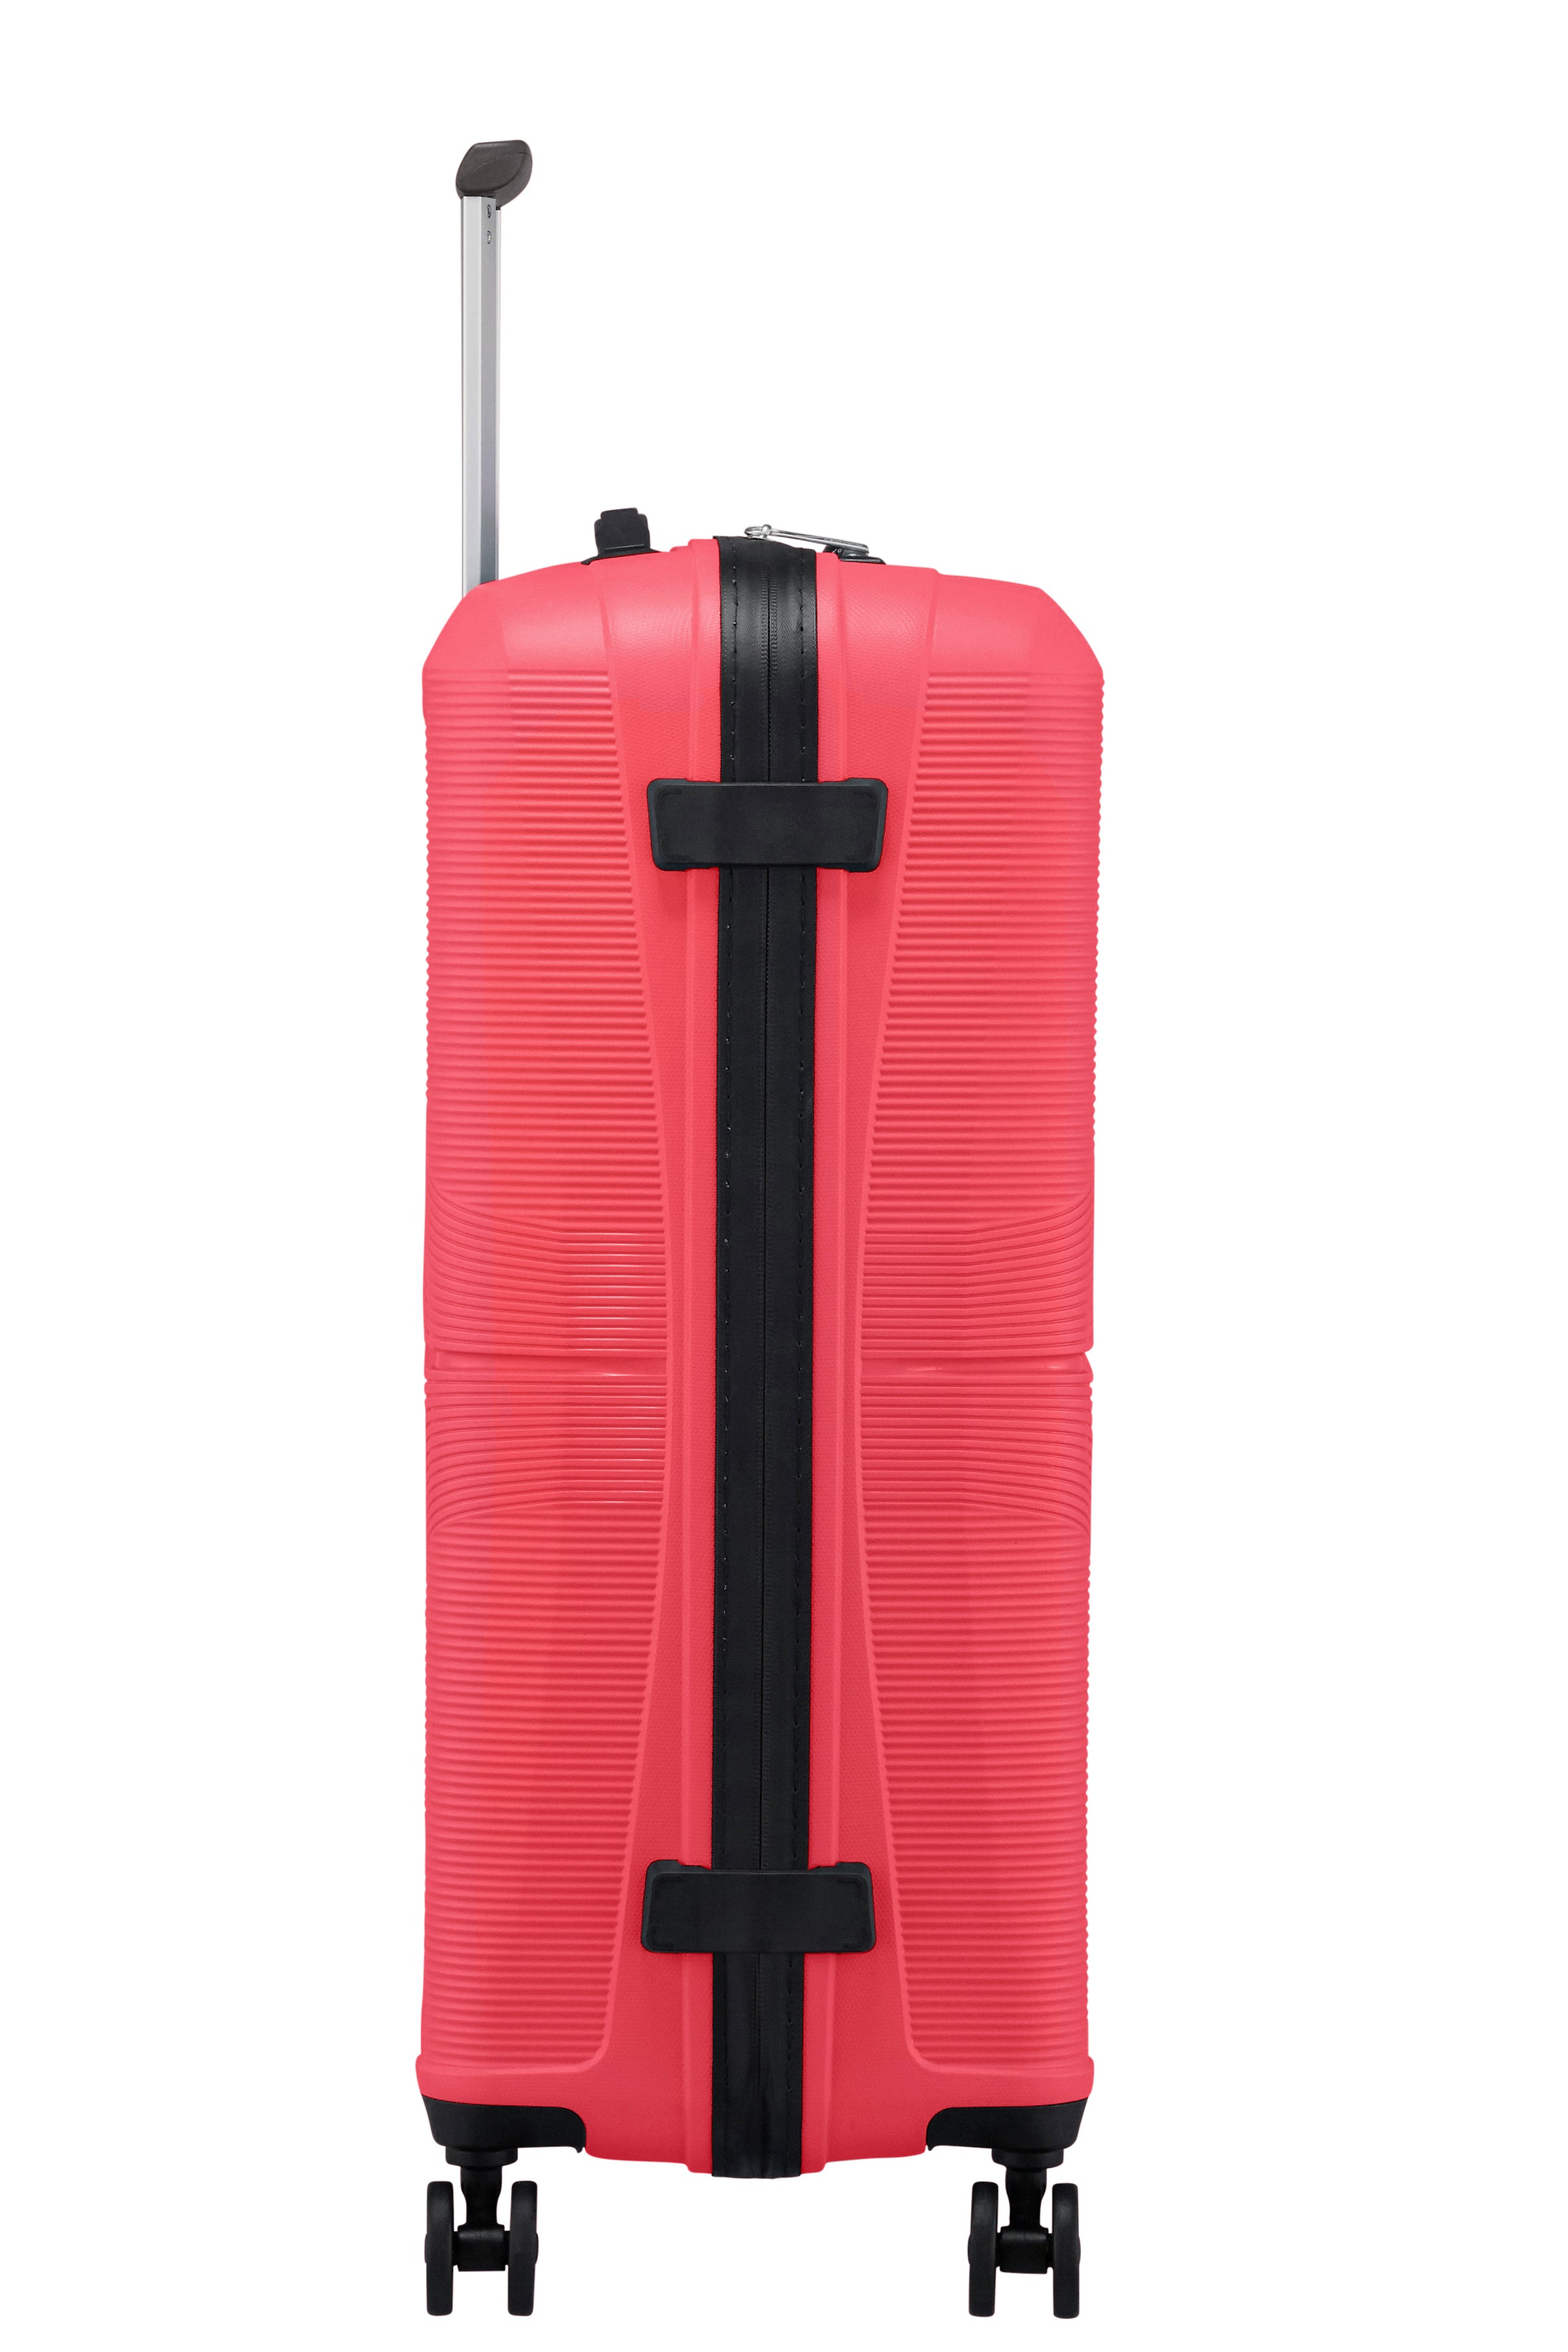 American Tourister - Airconic 67cm Medium 4 Wheel Hard Suitcase - Paradise Pink-4